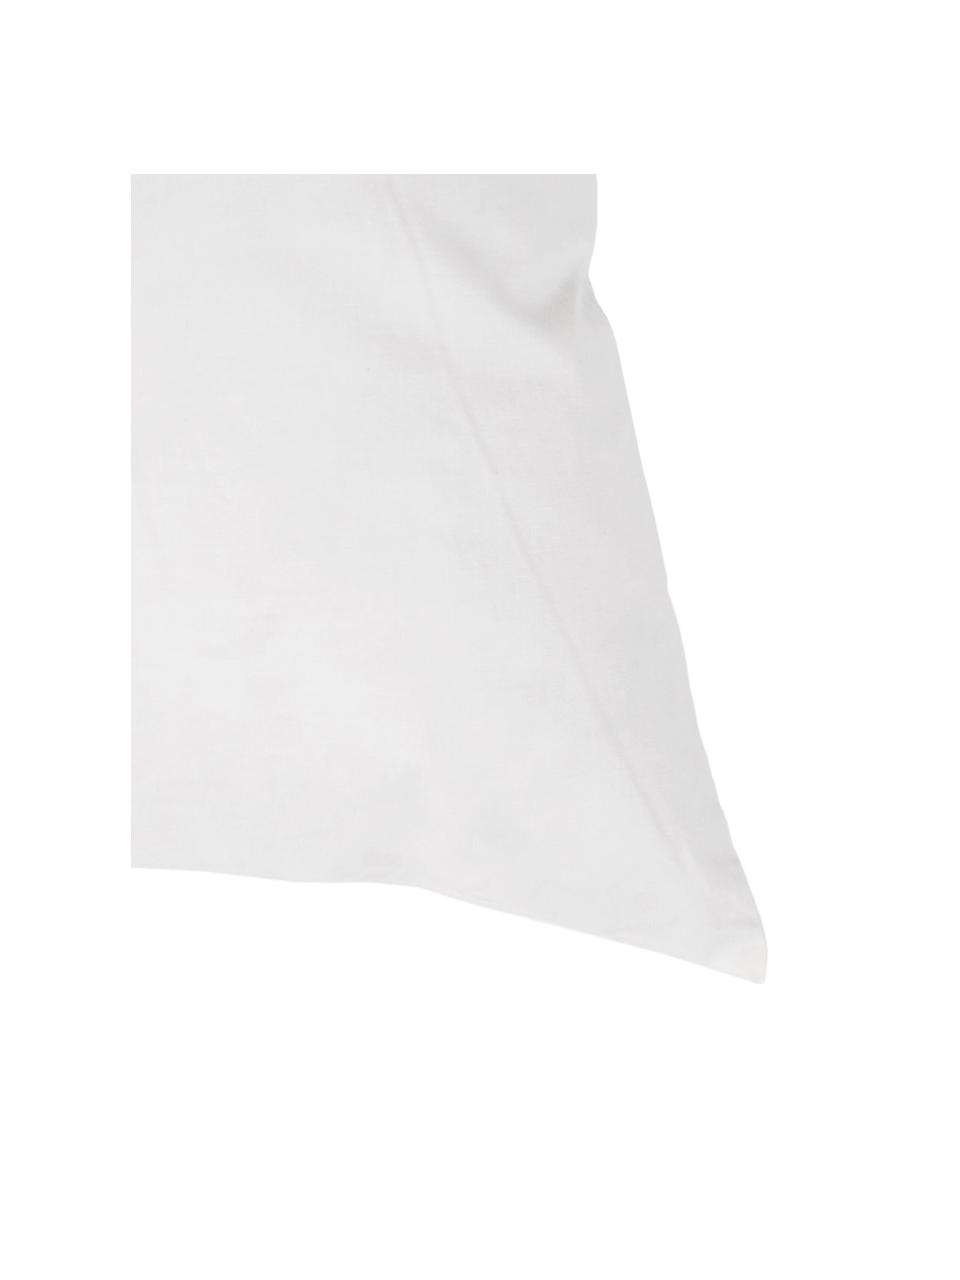 Relleno de cojín Premium, 60 x 60, Funda: percal Mako, 100% algodón, Blanco, An 60 x L 60 cm